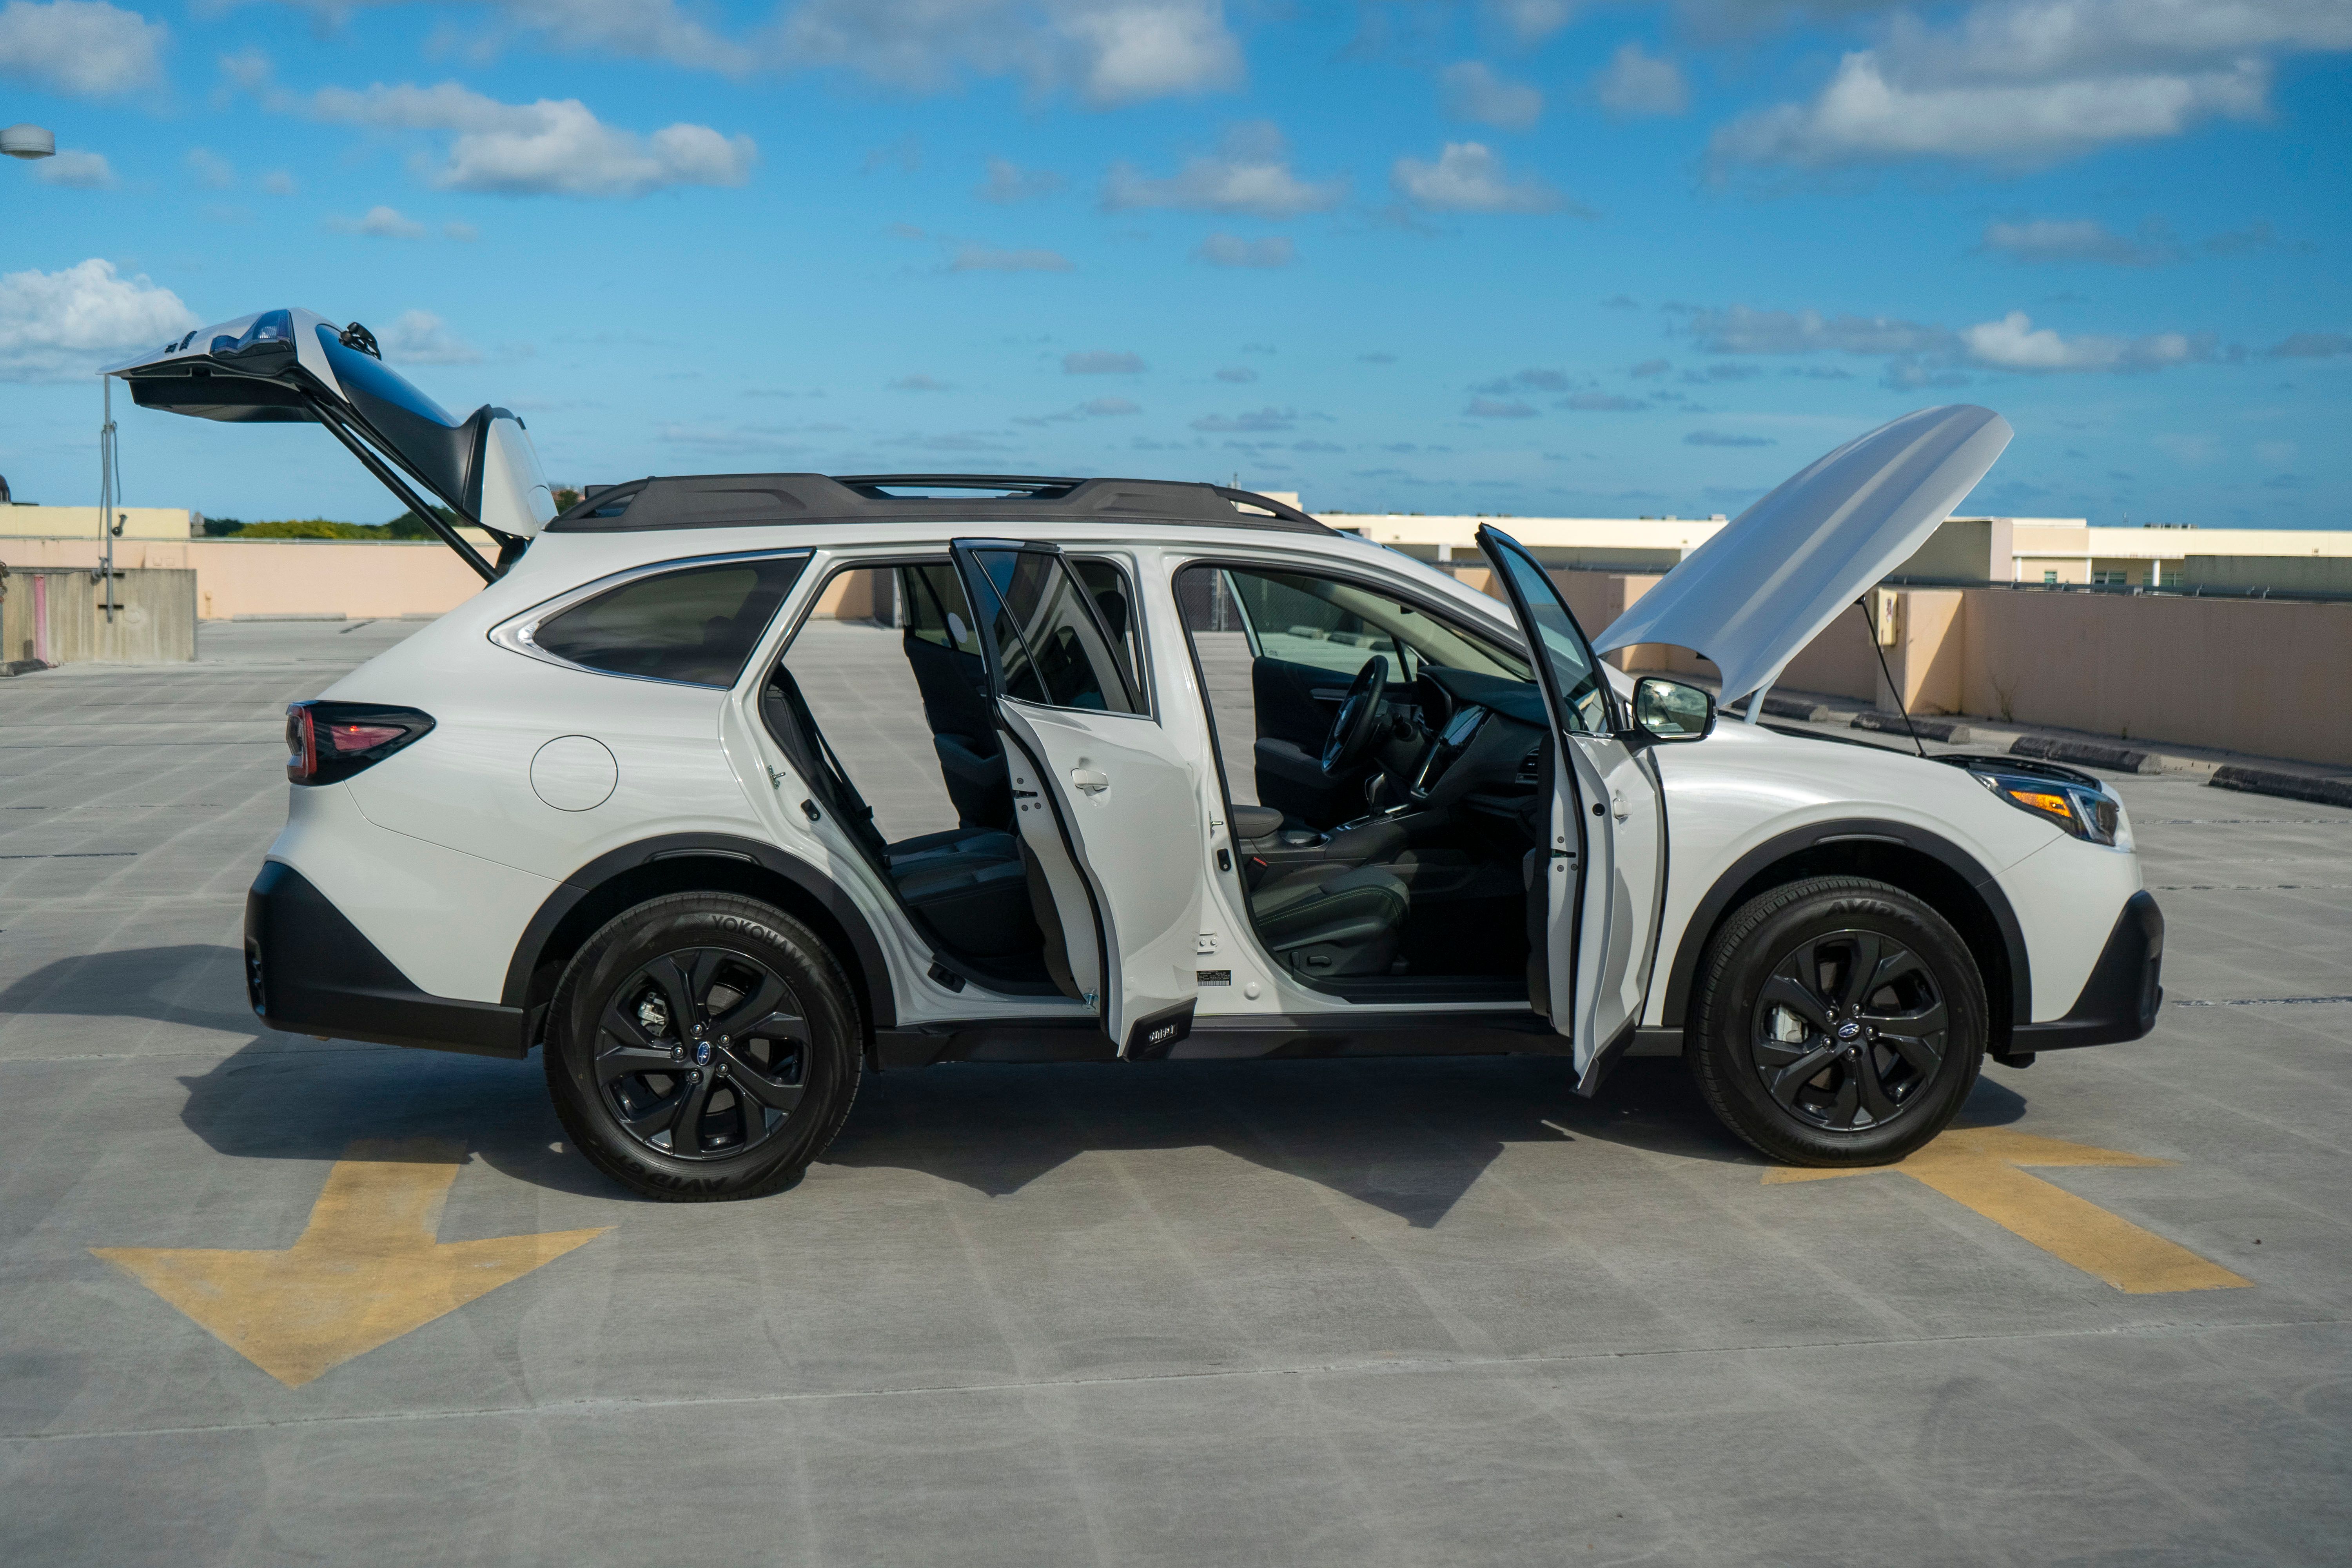 2020 Subaru Outback - Driven